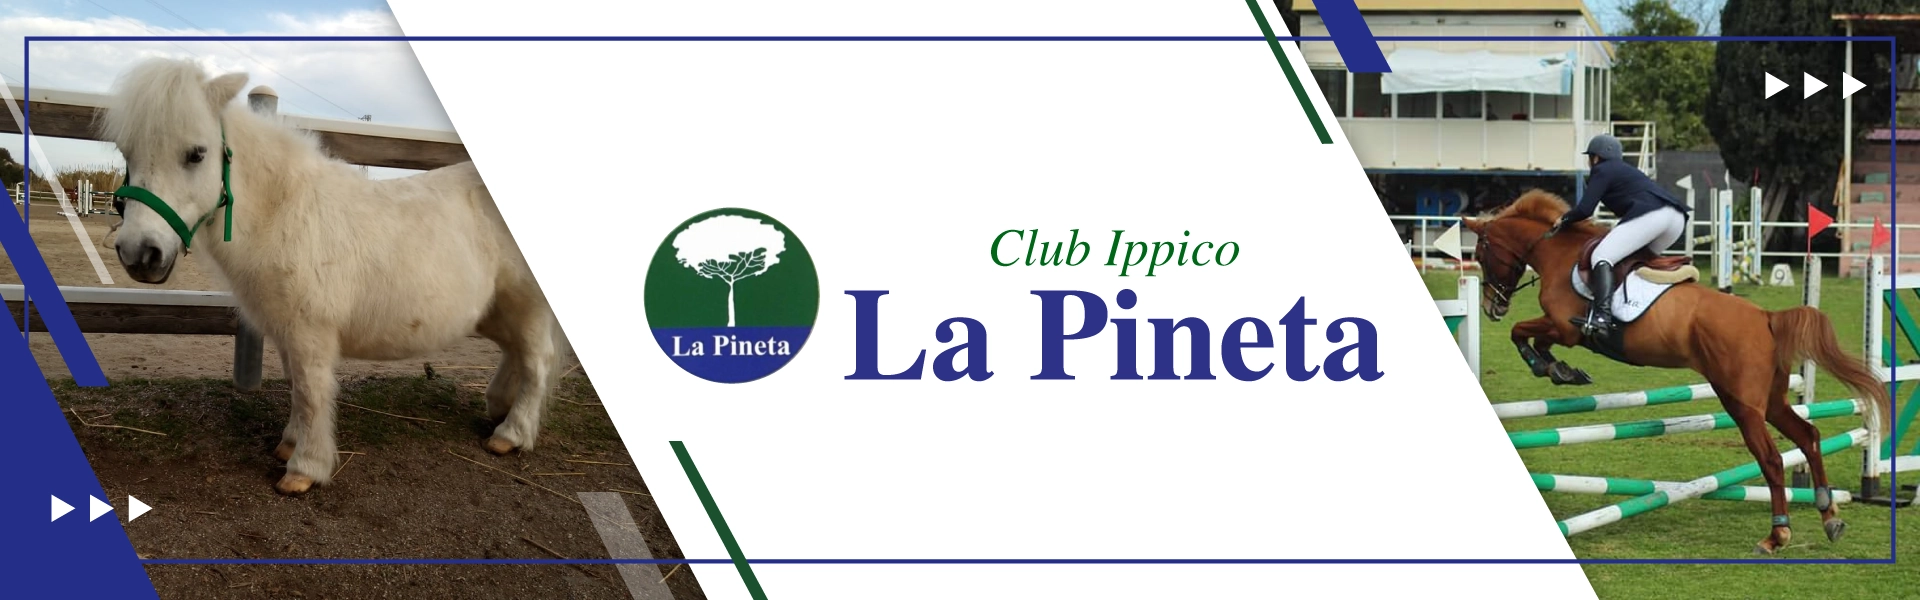 header club ippico villafranca tirrena messina